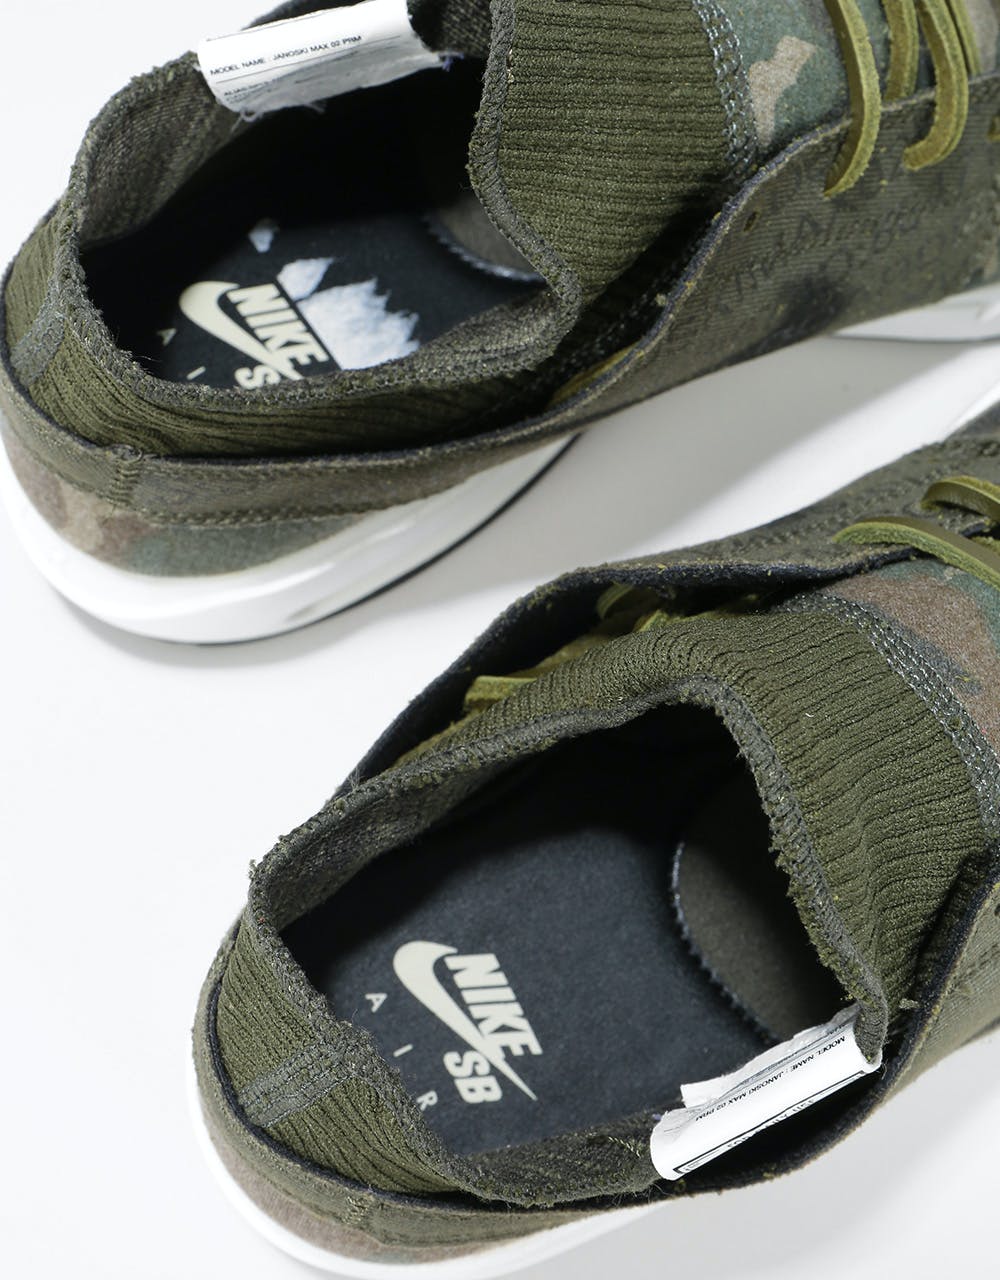 Nike SB Air Max Janoski 2 Premium Shoes - Iguana/Black-Cargo Khaki